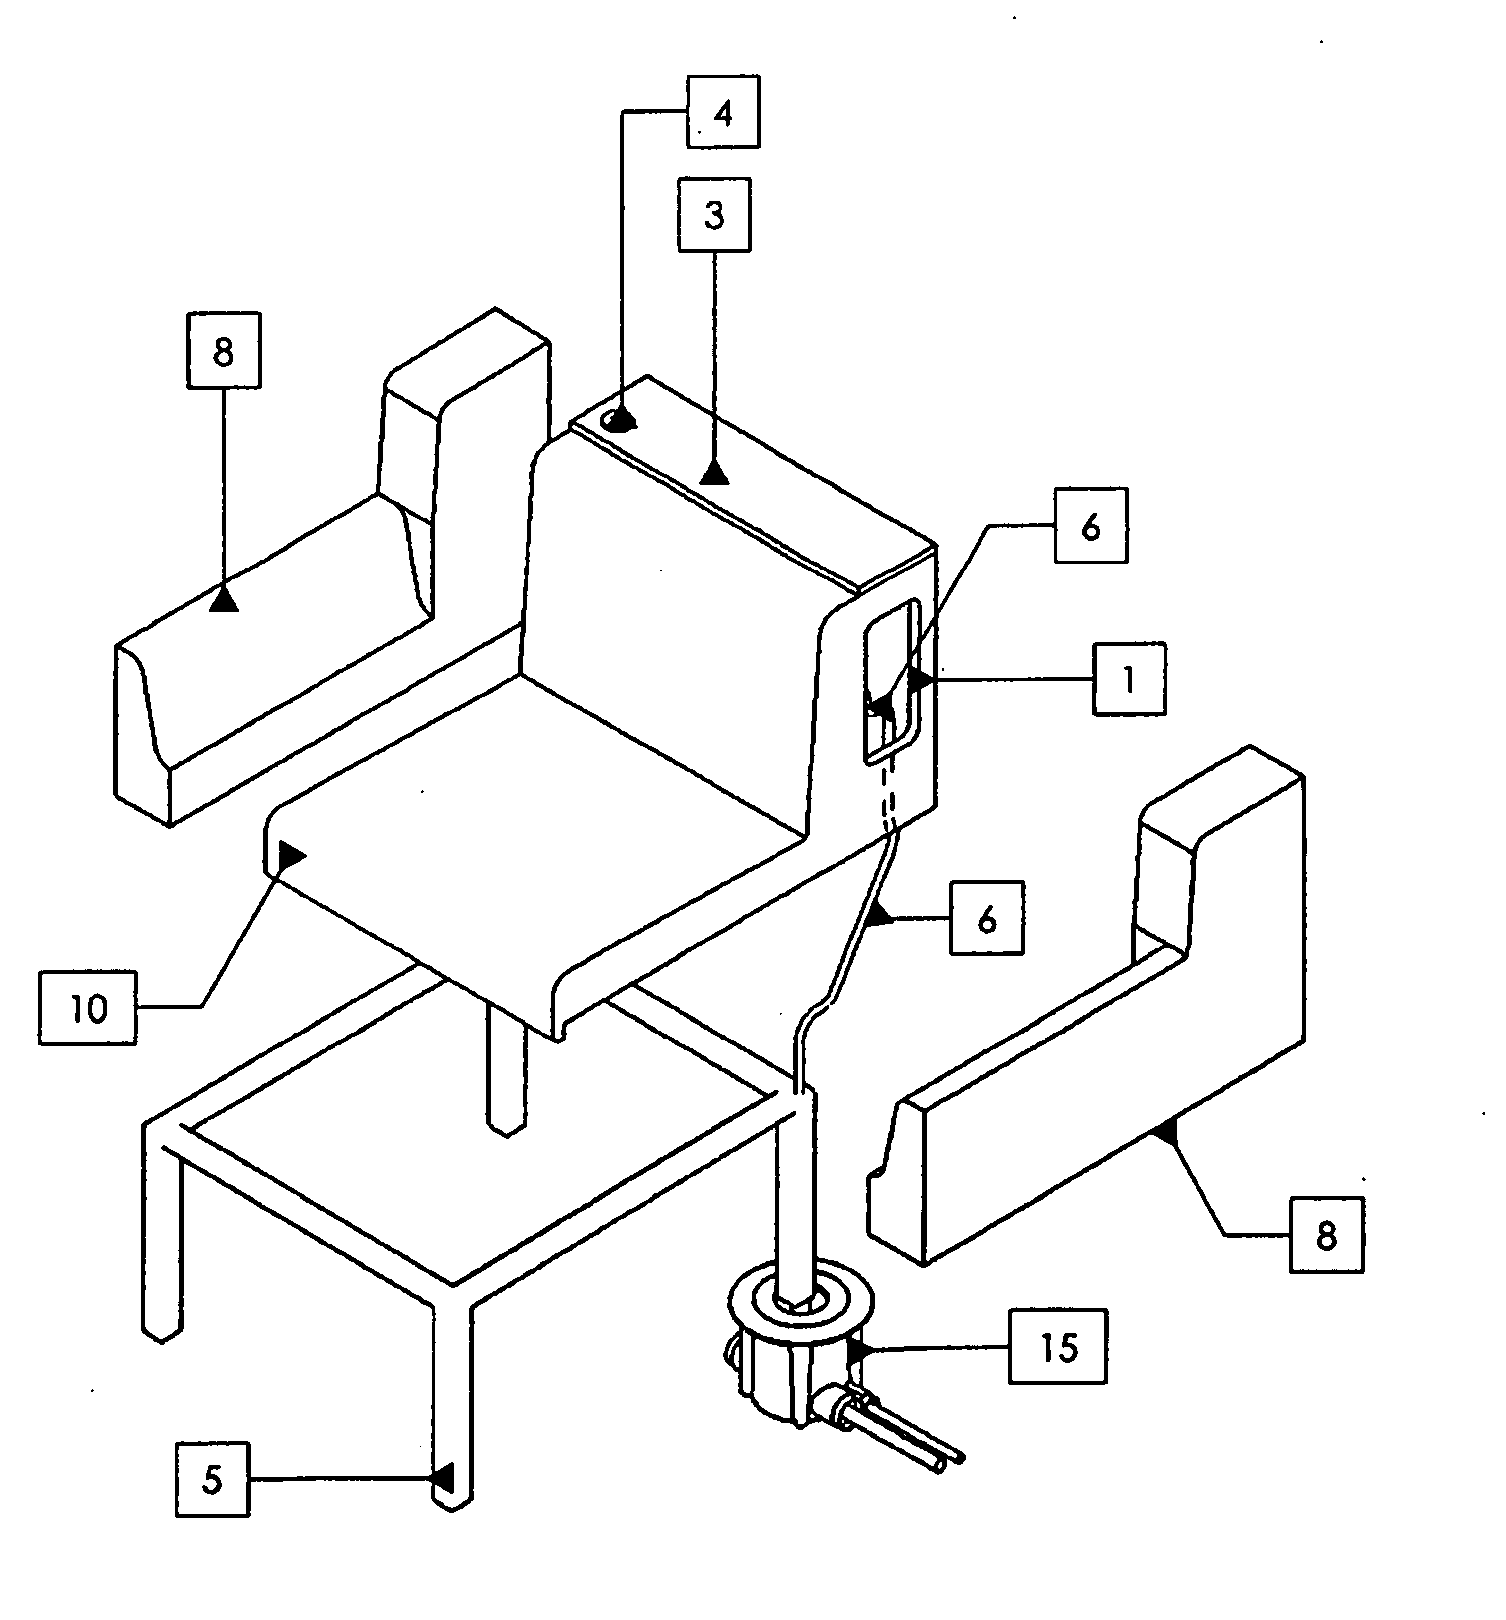 Ampere modular tandem seating system